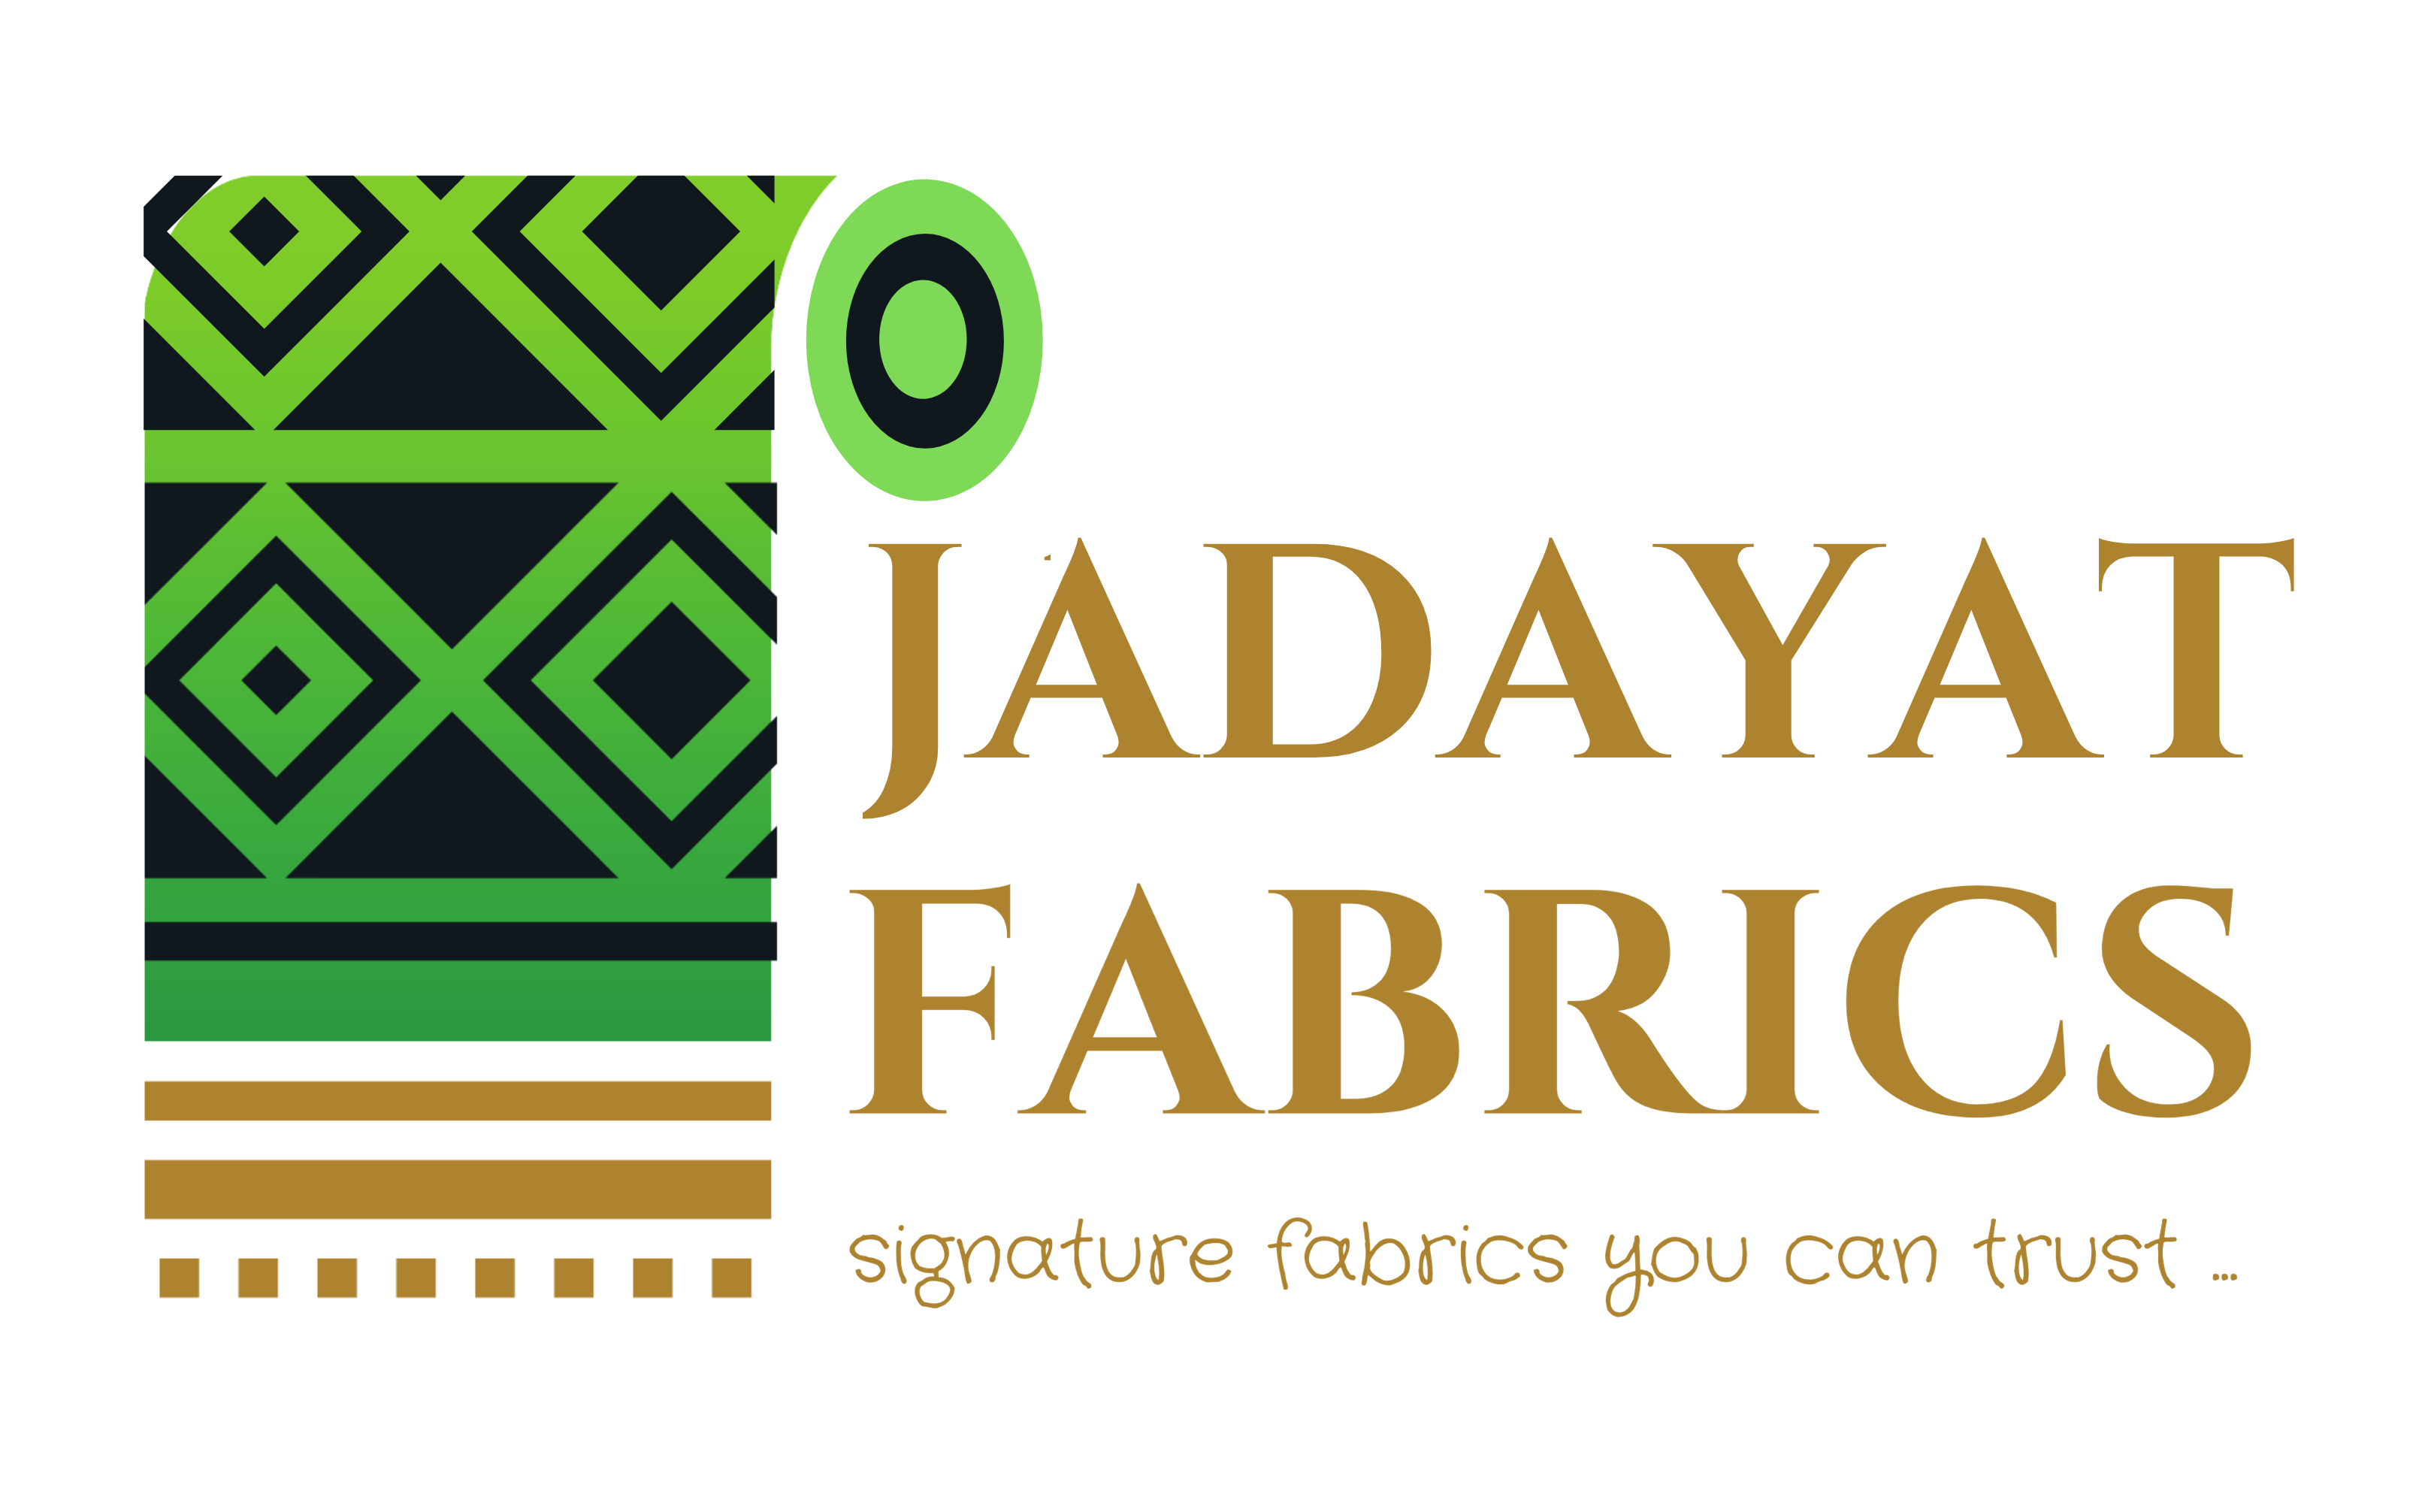 JADAYAT Fabrics